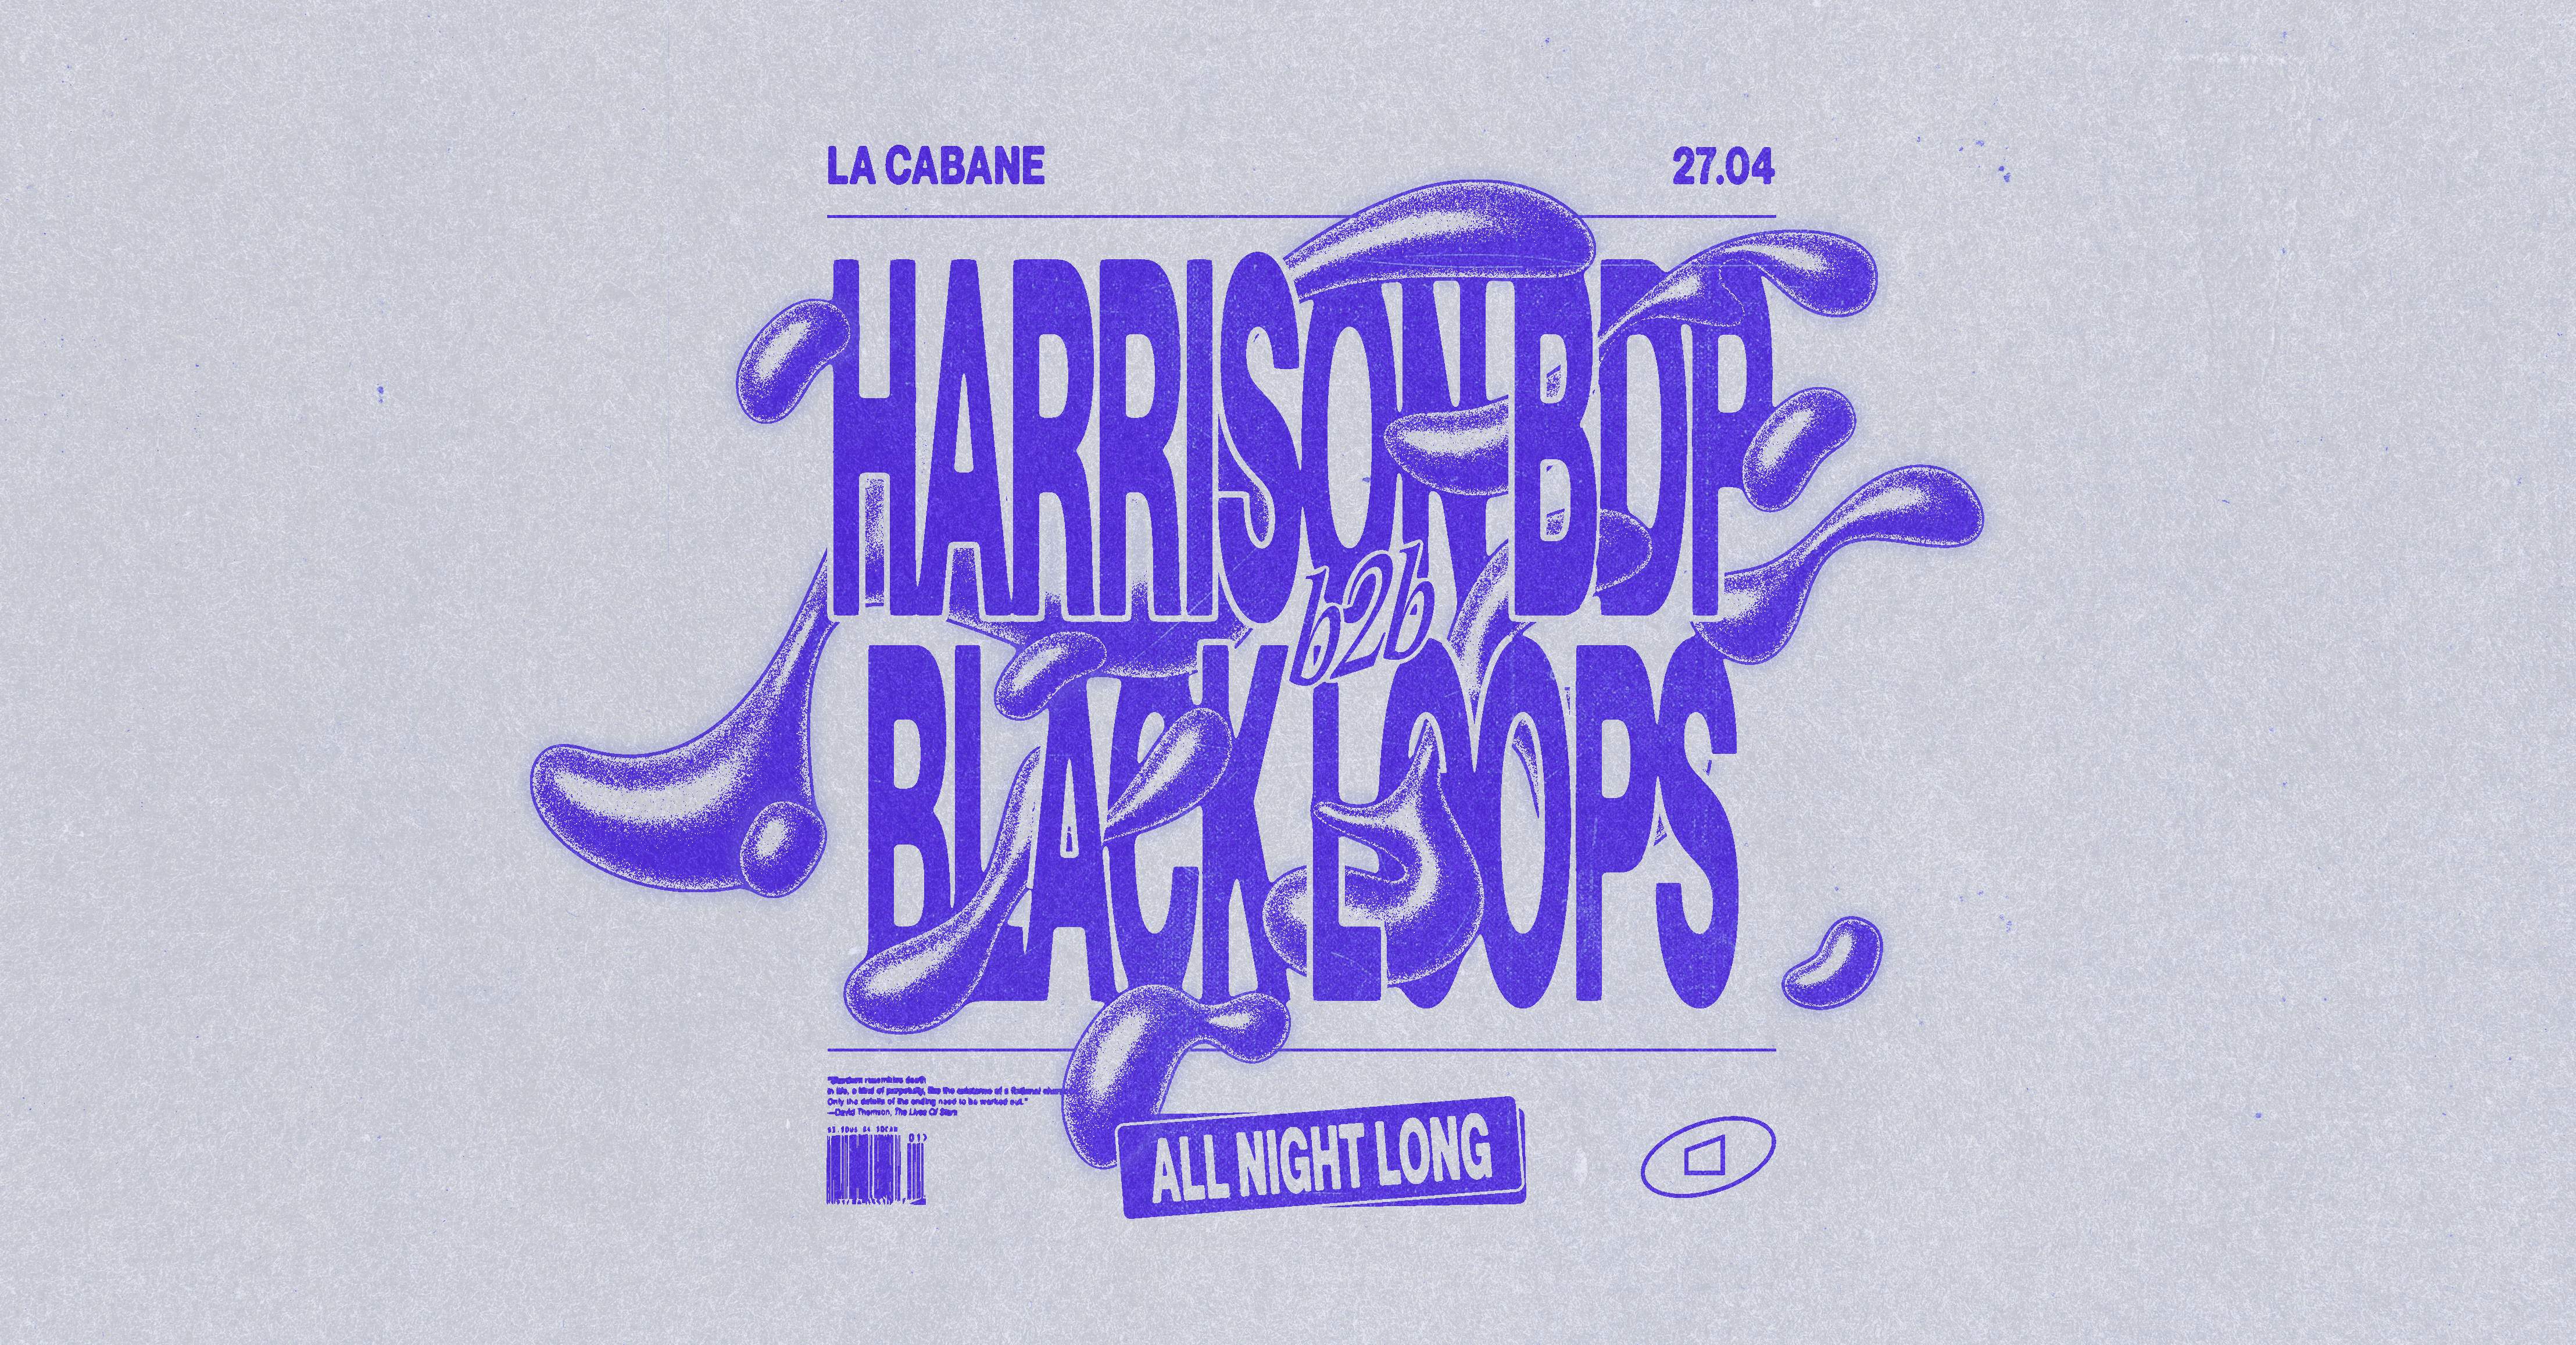 La Cabane - Harrison BDP b2b Black Loops All night long - フライヤー表